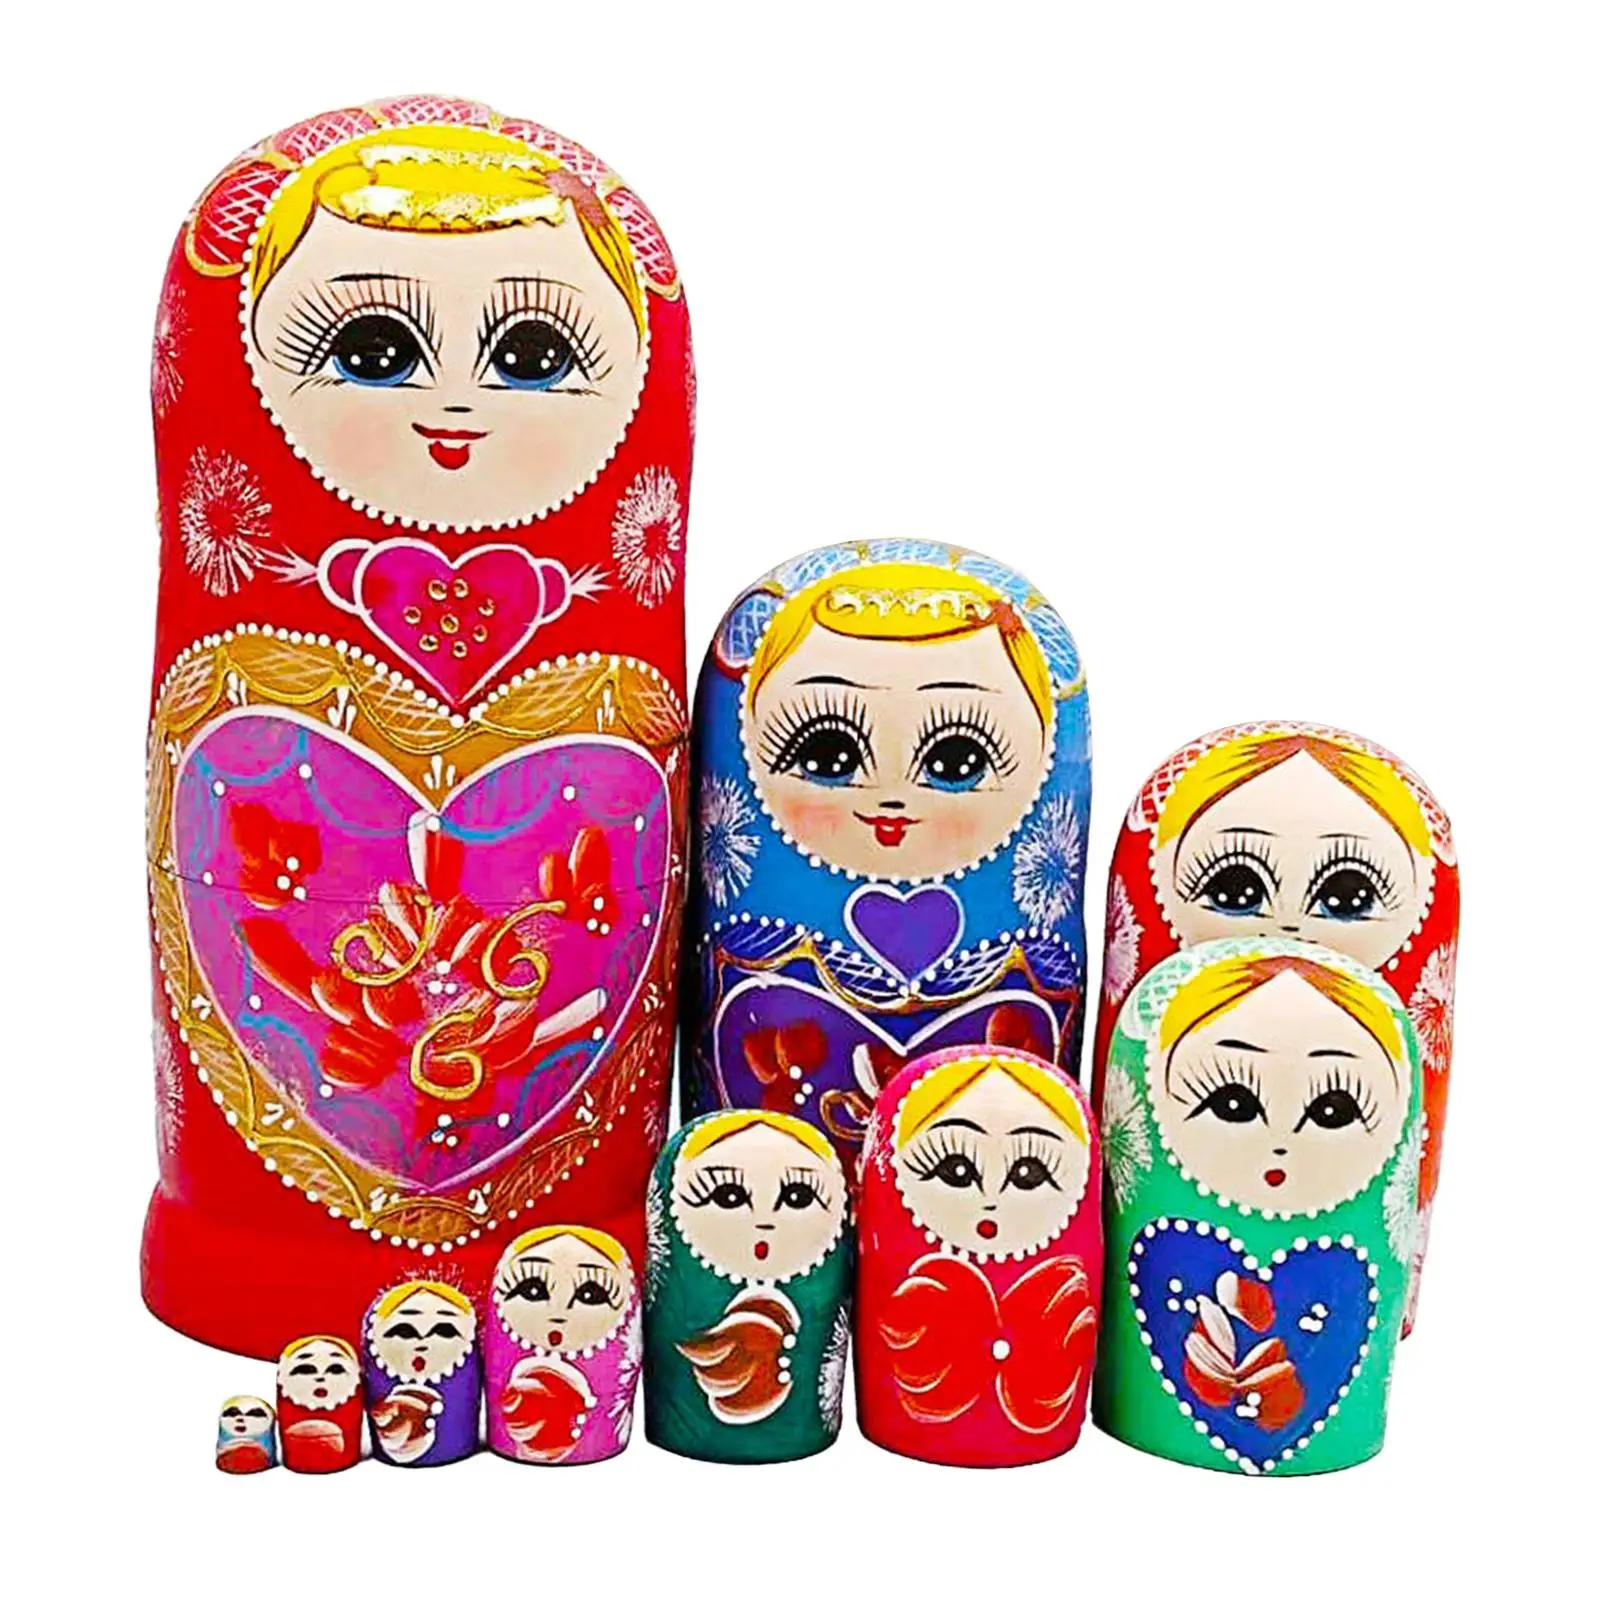 10 Pieces Matryoshka Doll Desk Figures Wooden Russian Nesting Doll Ornaments